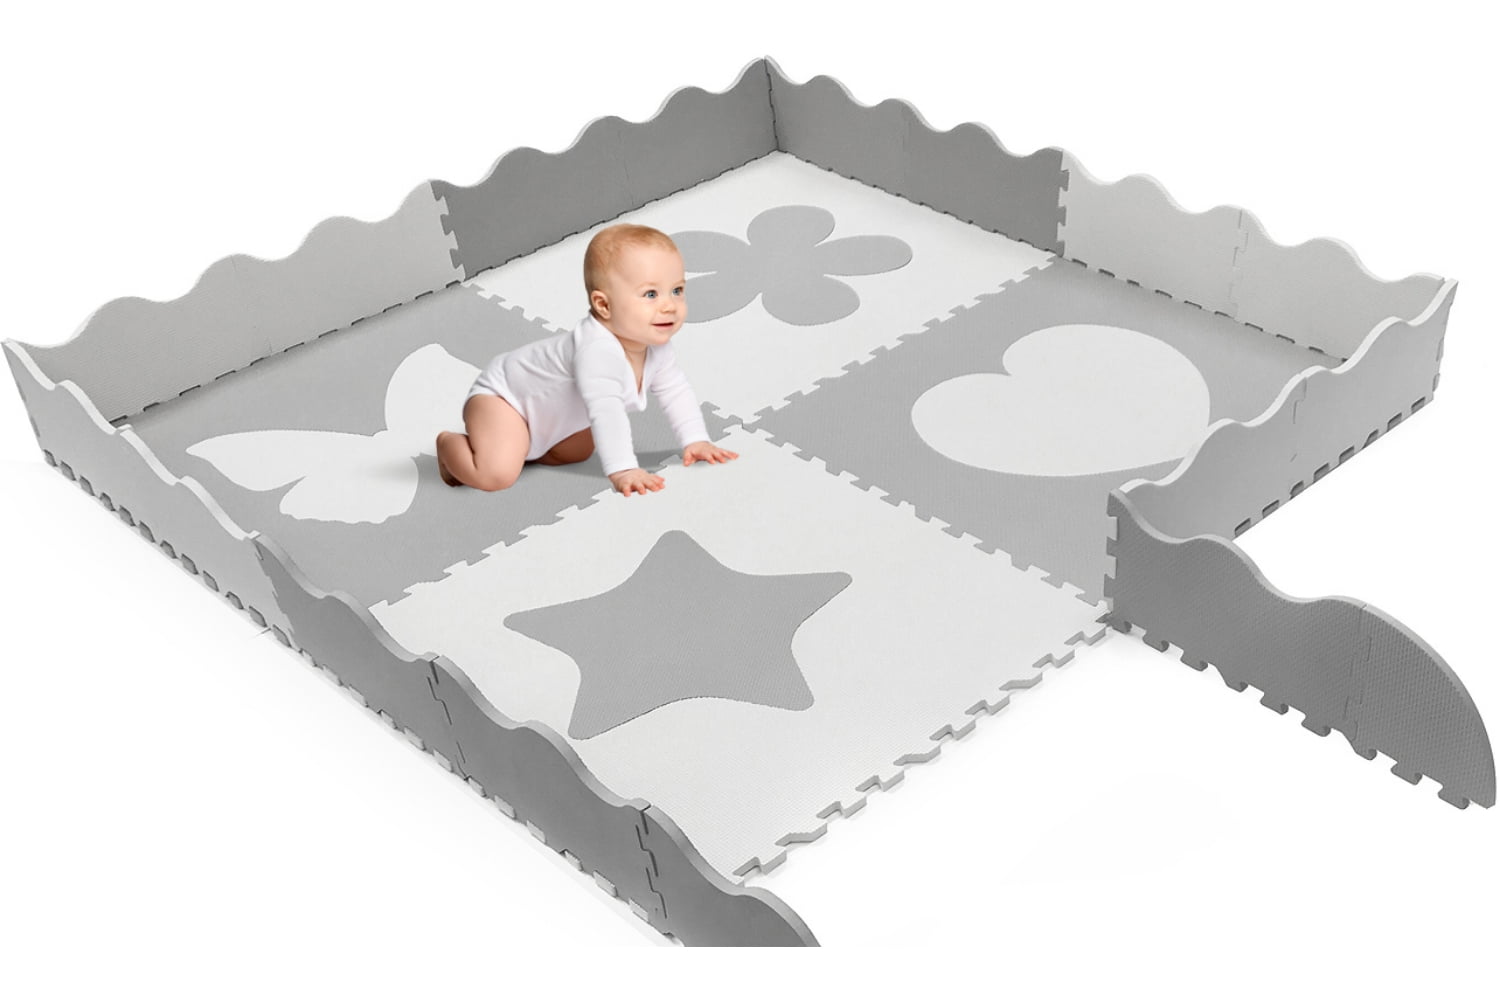 Baby Rooms Toddler Infant Exercise Area Carpet Kids Interlocking Floor Puzzle Play Mat Multicolored 30 Tiles Soft Safe EVA Foam Excellent for Children Day Cares Beige + Grey 